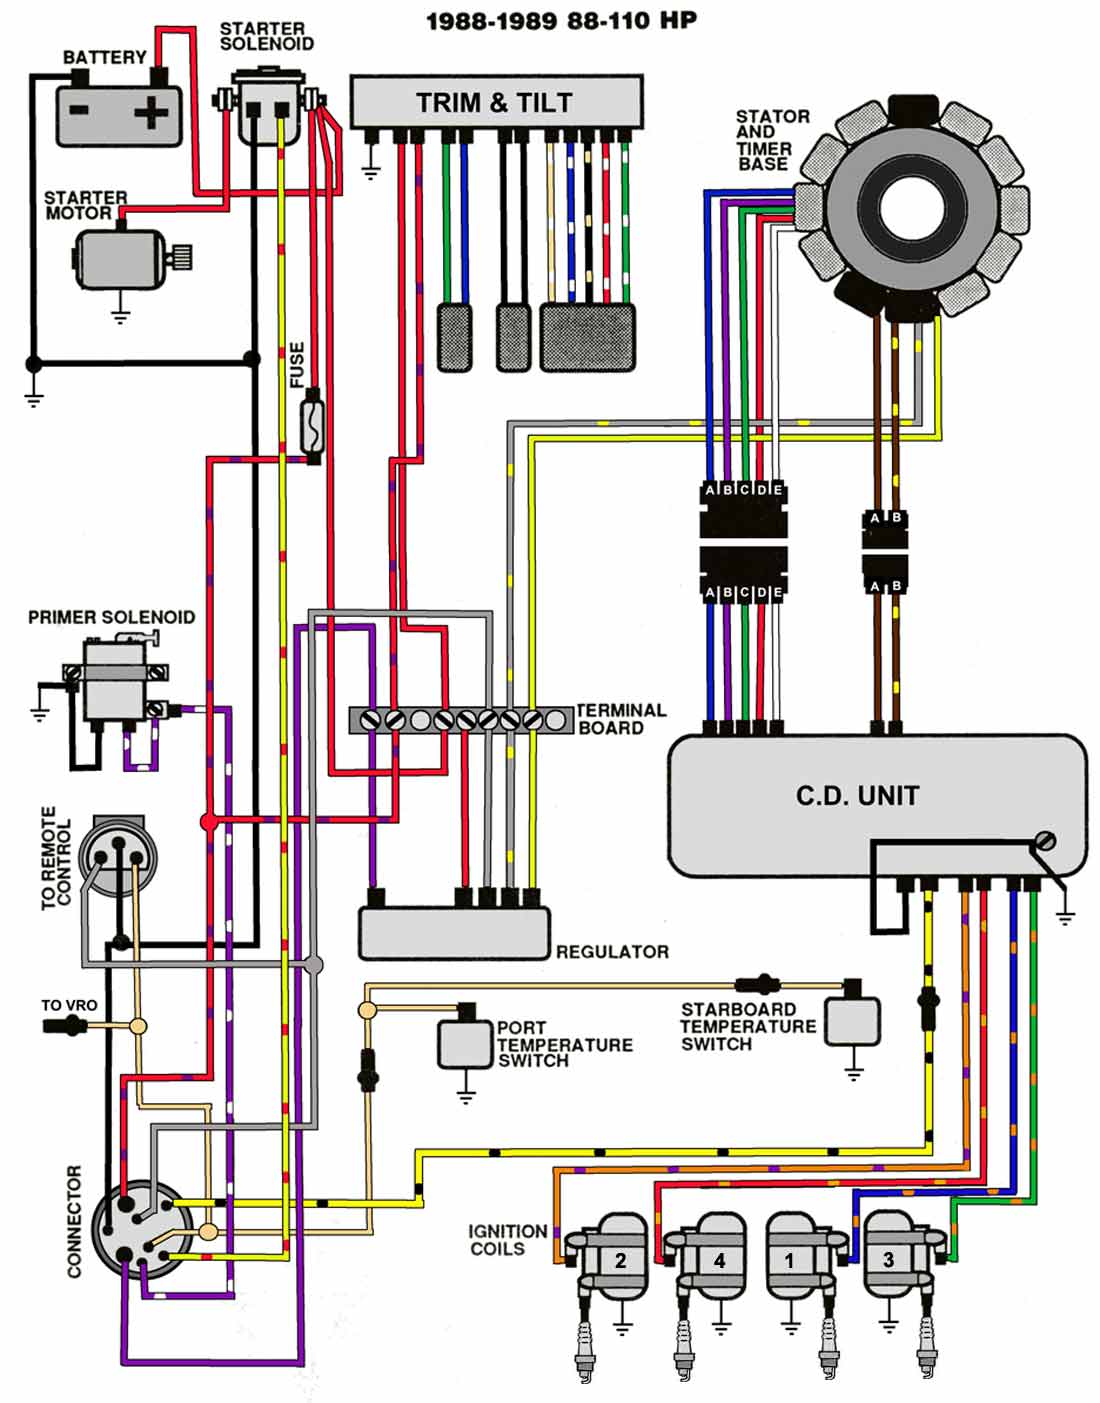 Diagram 1976 Johnson Outboard Wiring Diagram Full Version Hd Quality Wiring Diagram Gwendiagram Oliovinoturismo It